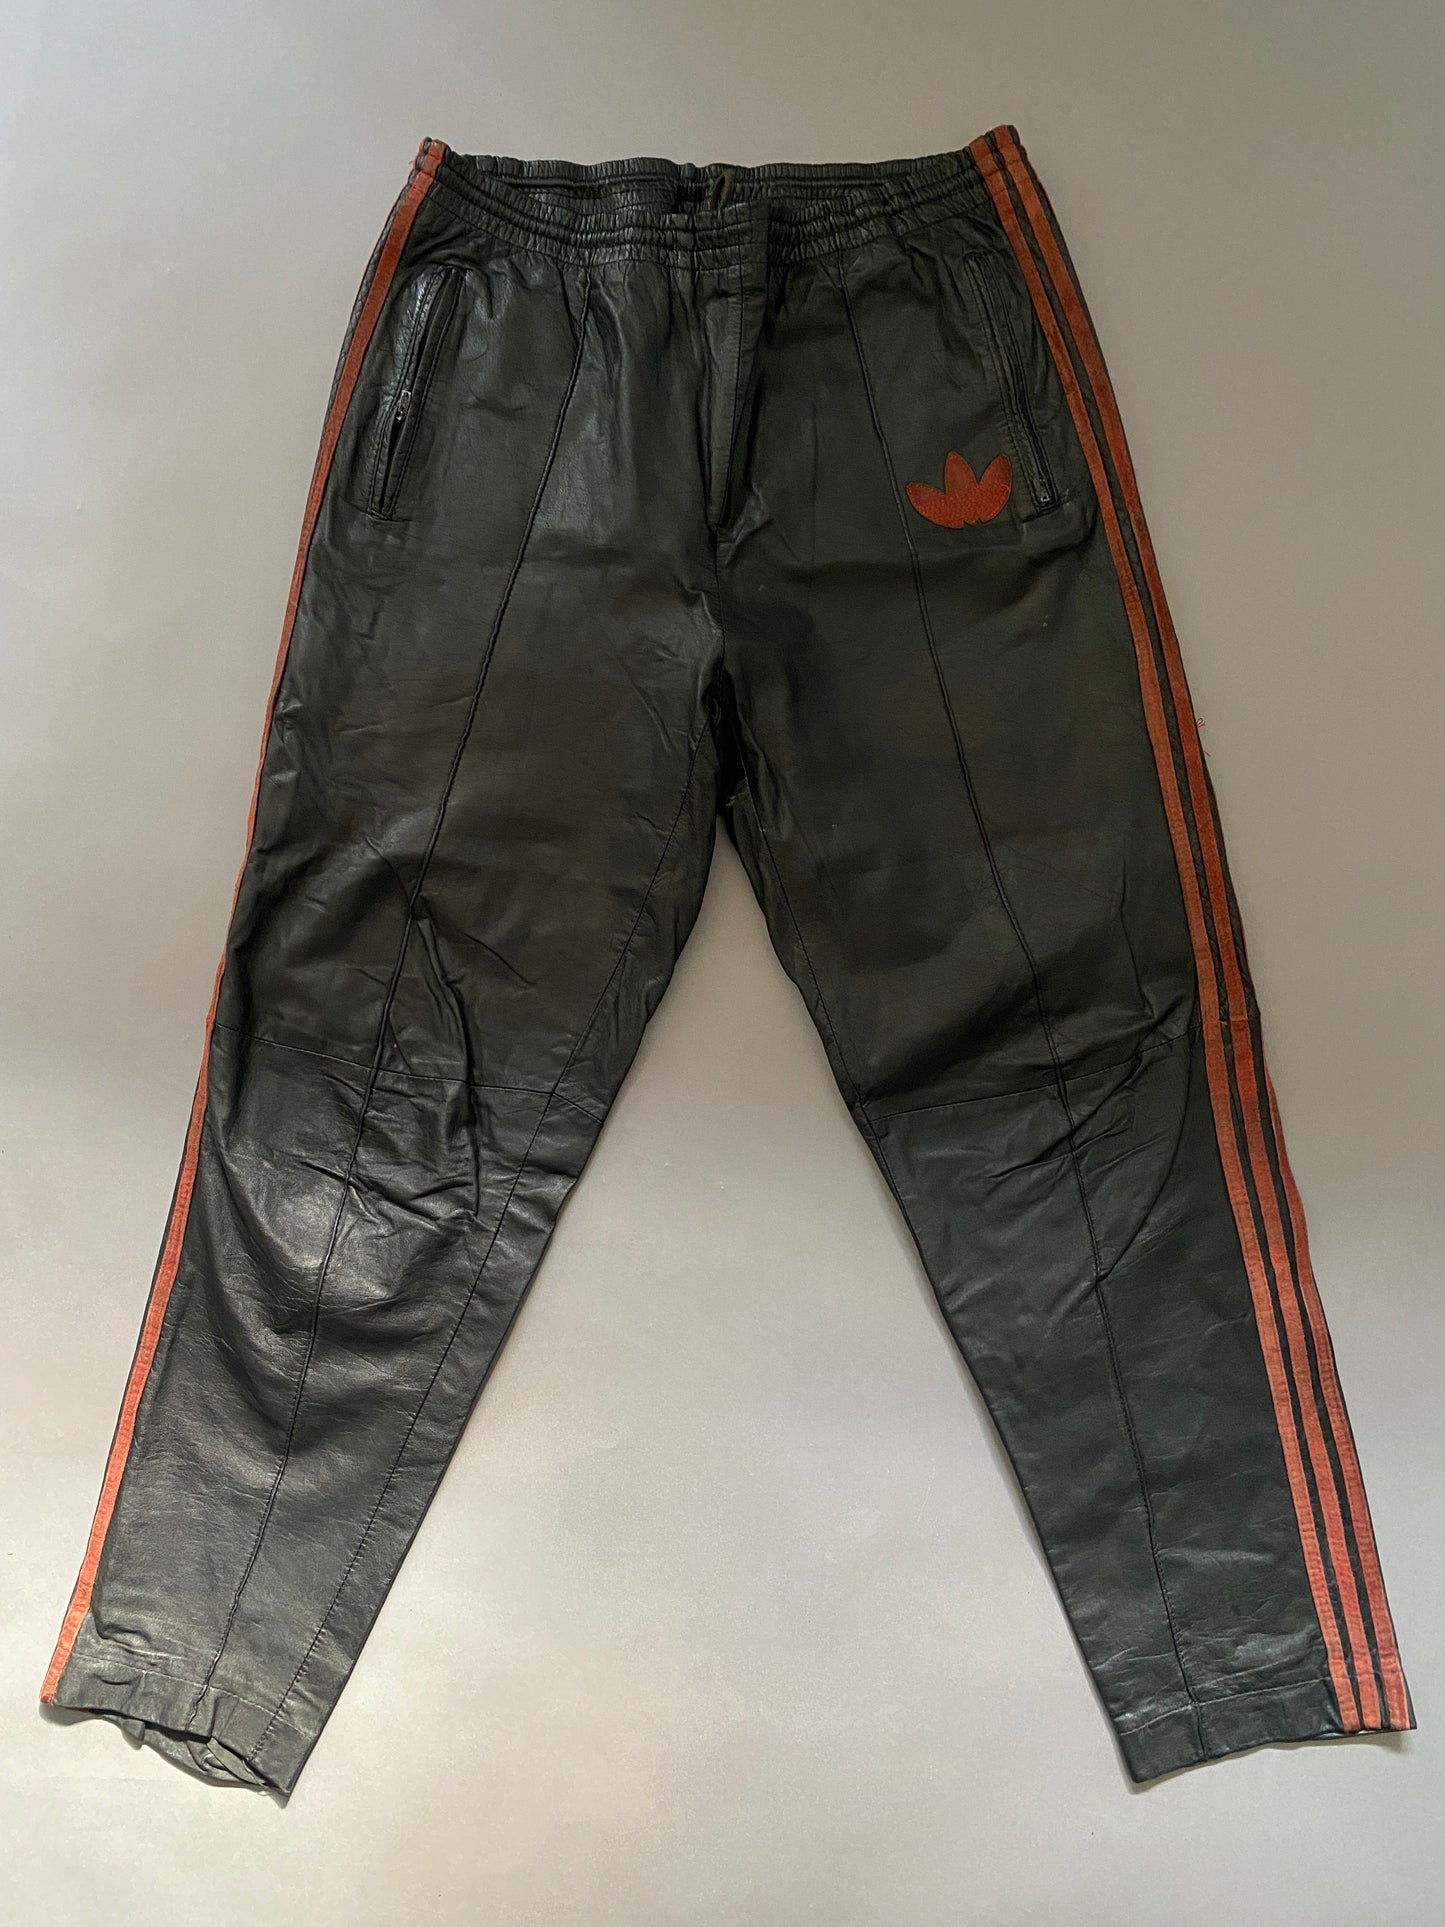 Adidas Leather Trackpants 80's Vintage